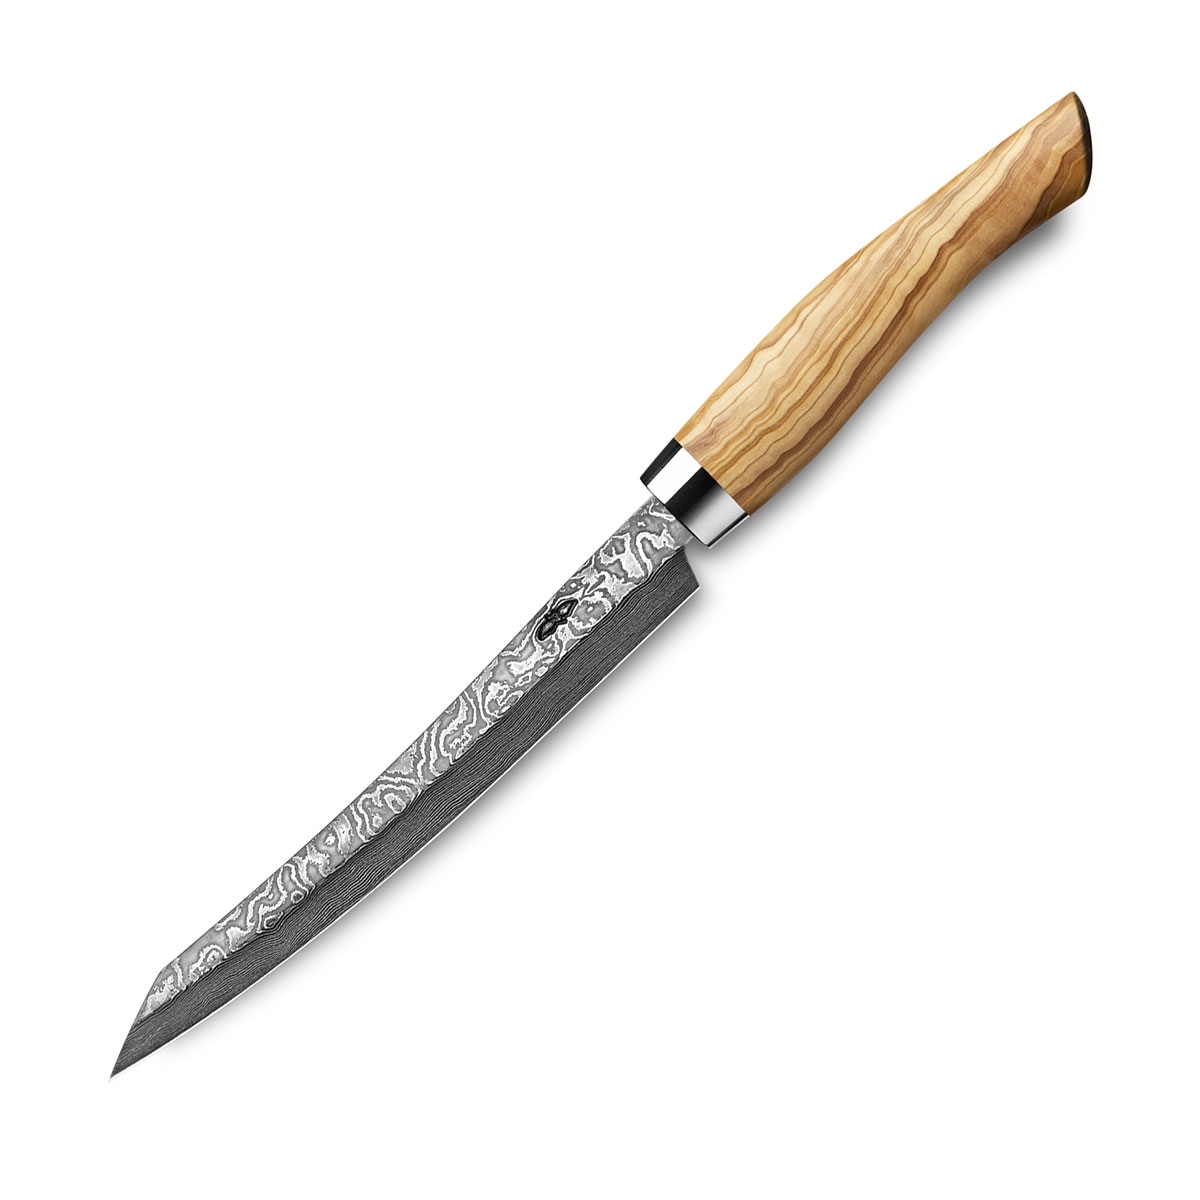 Nesmuk Exklusiv C150 Damast Slicer 16 cm mit Schneidlage / Griff aus Olivenholz